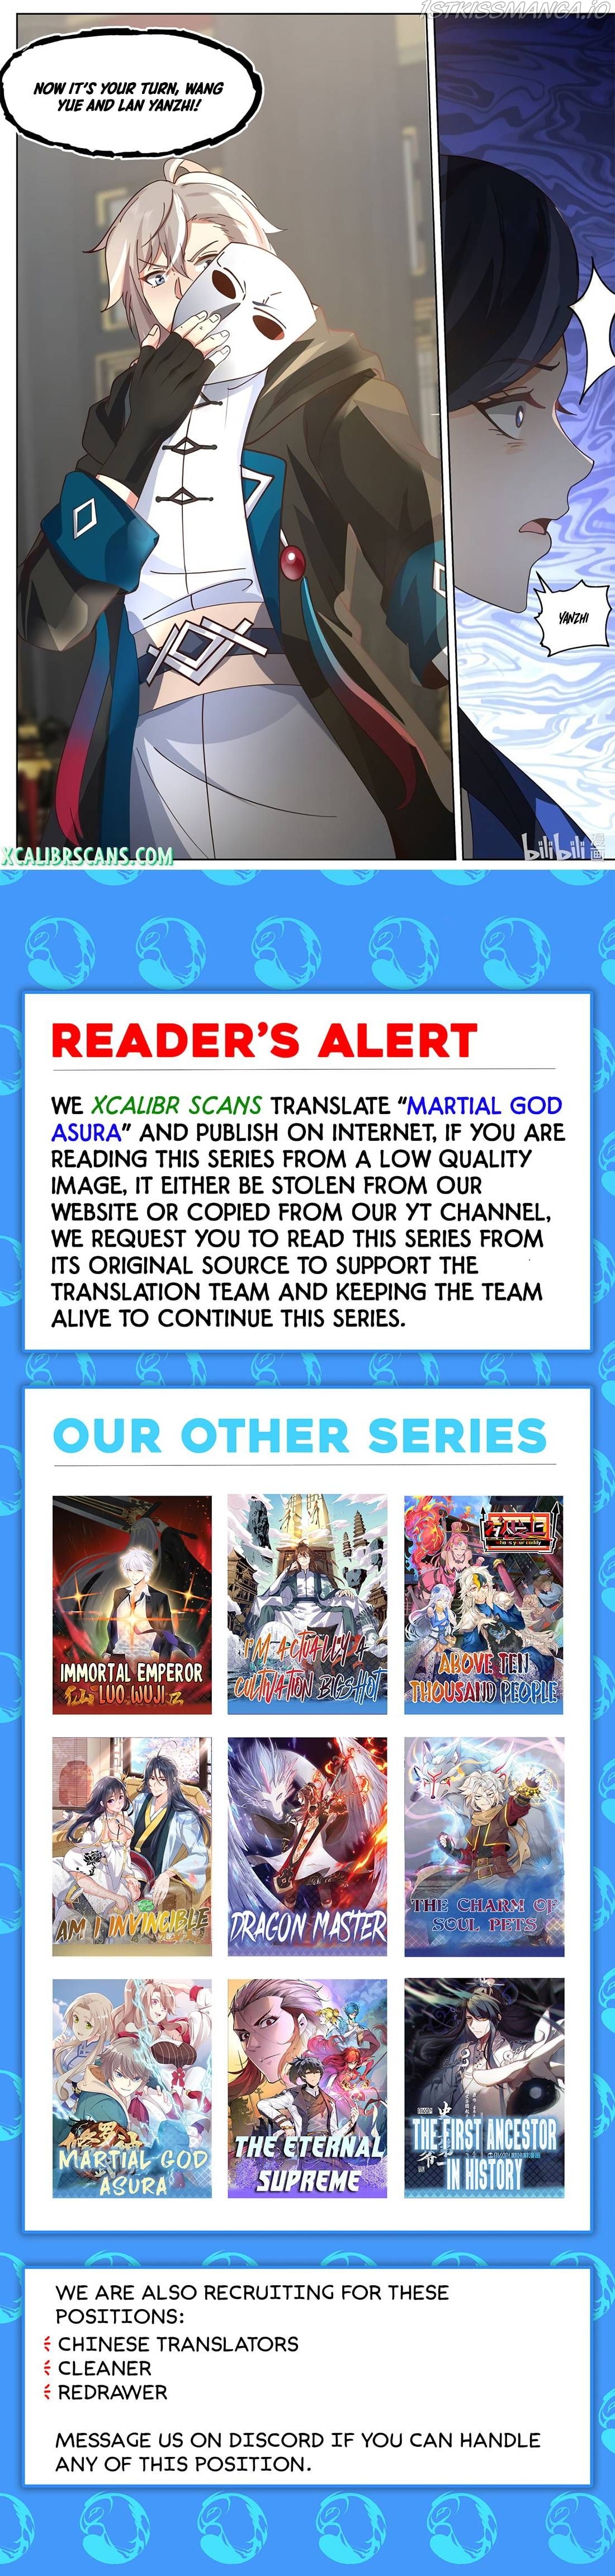 Martial God Asura Chapter 503 - Page 9